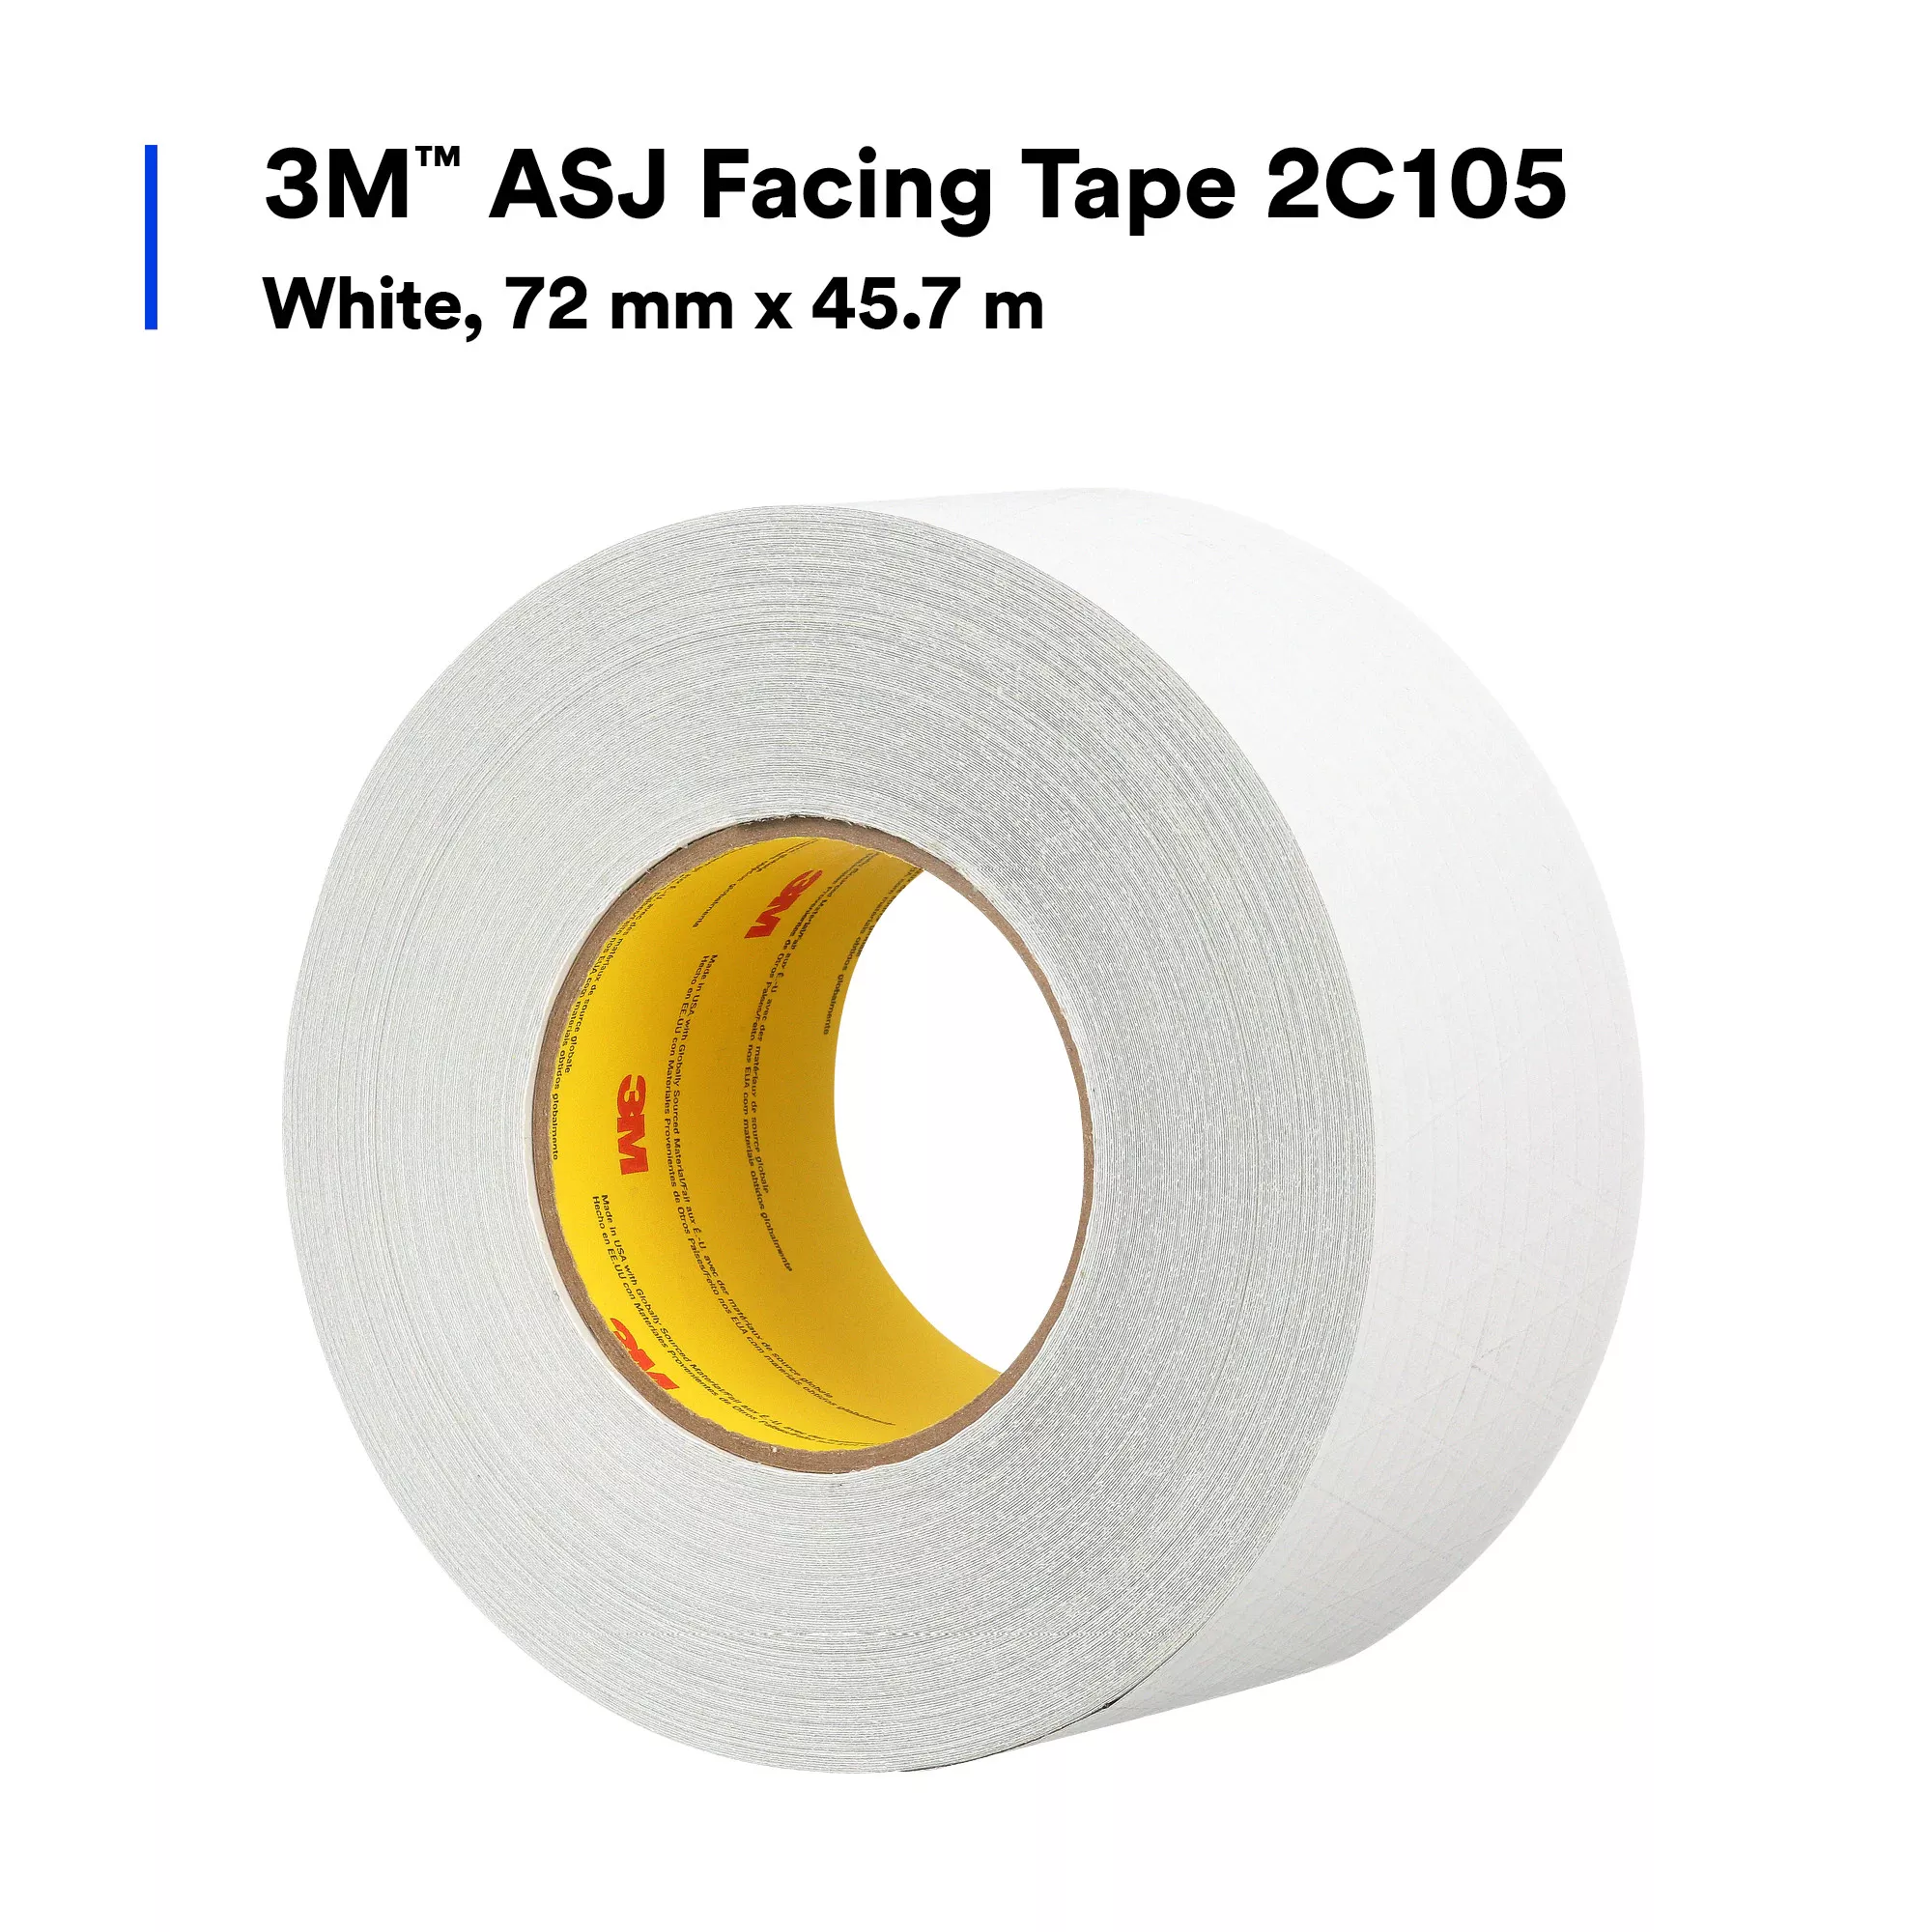 SKU 7100043842 | 3M™ ASJ Facing Tape 2C105